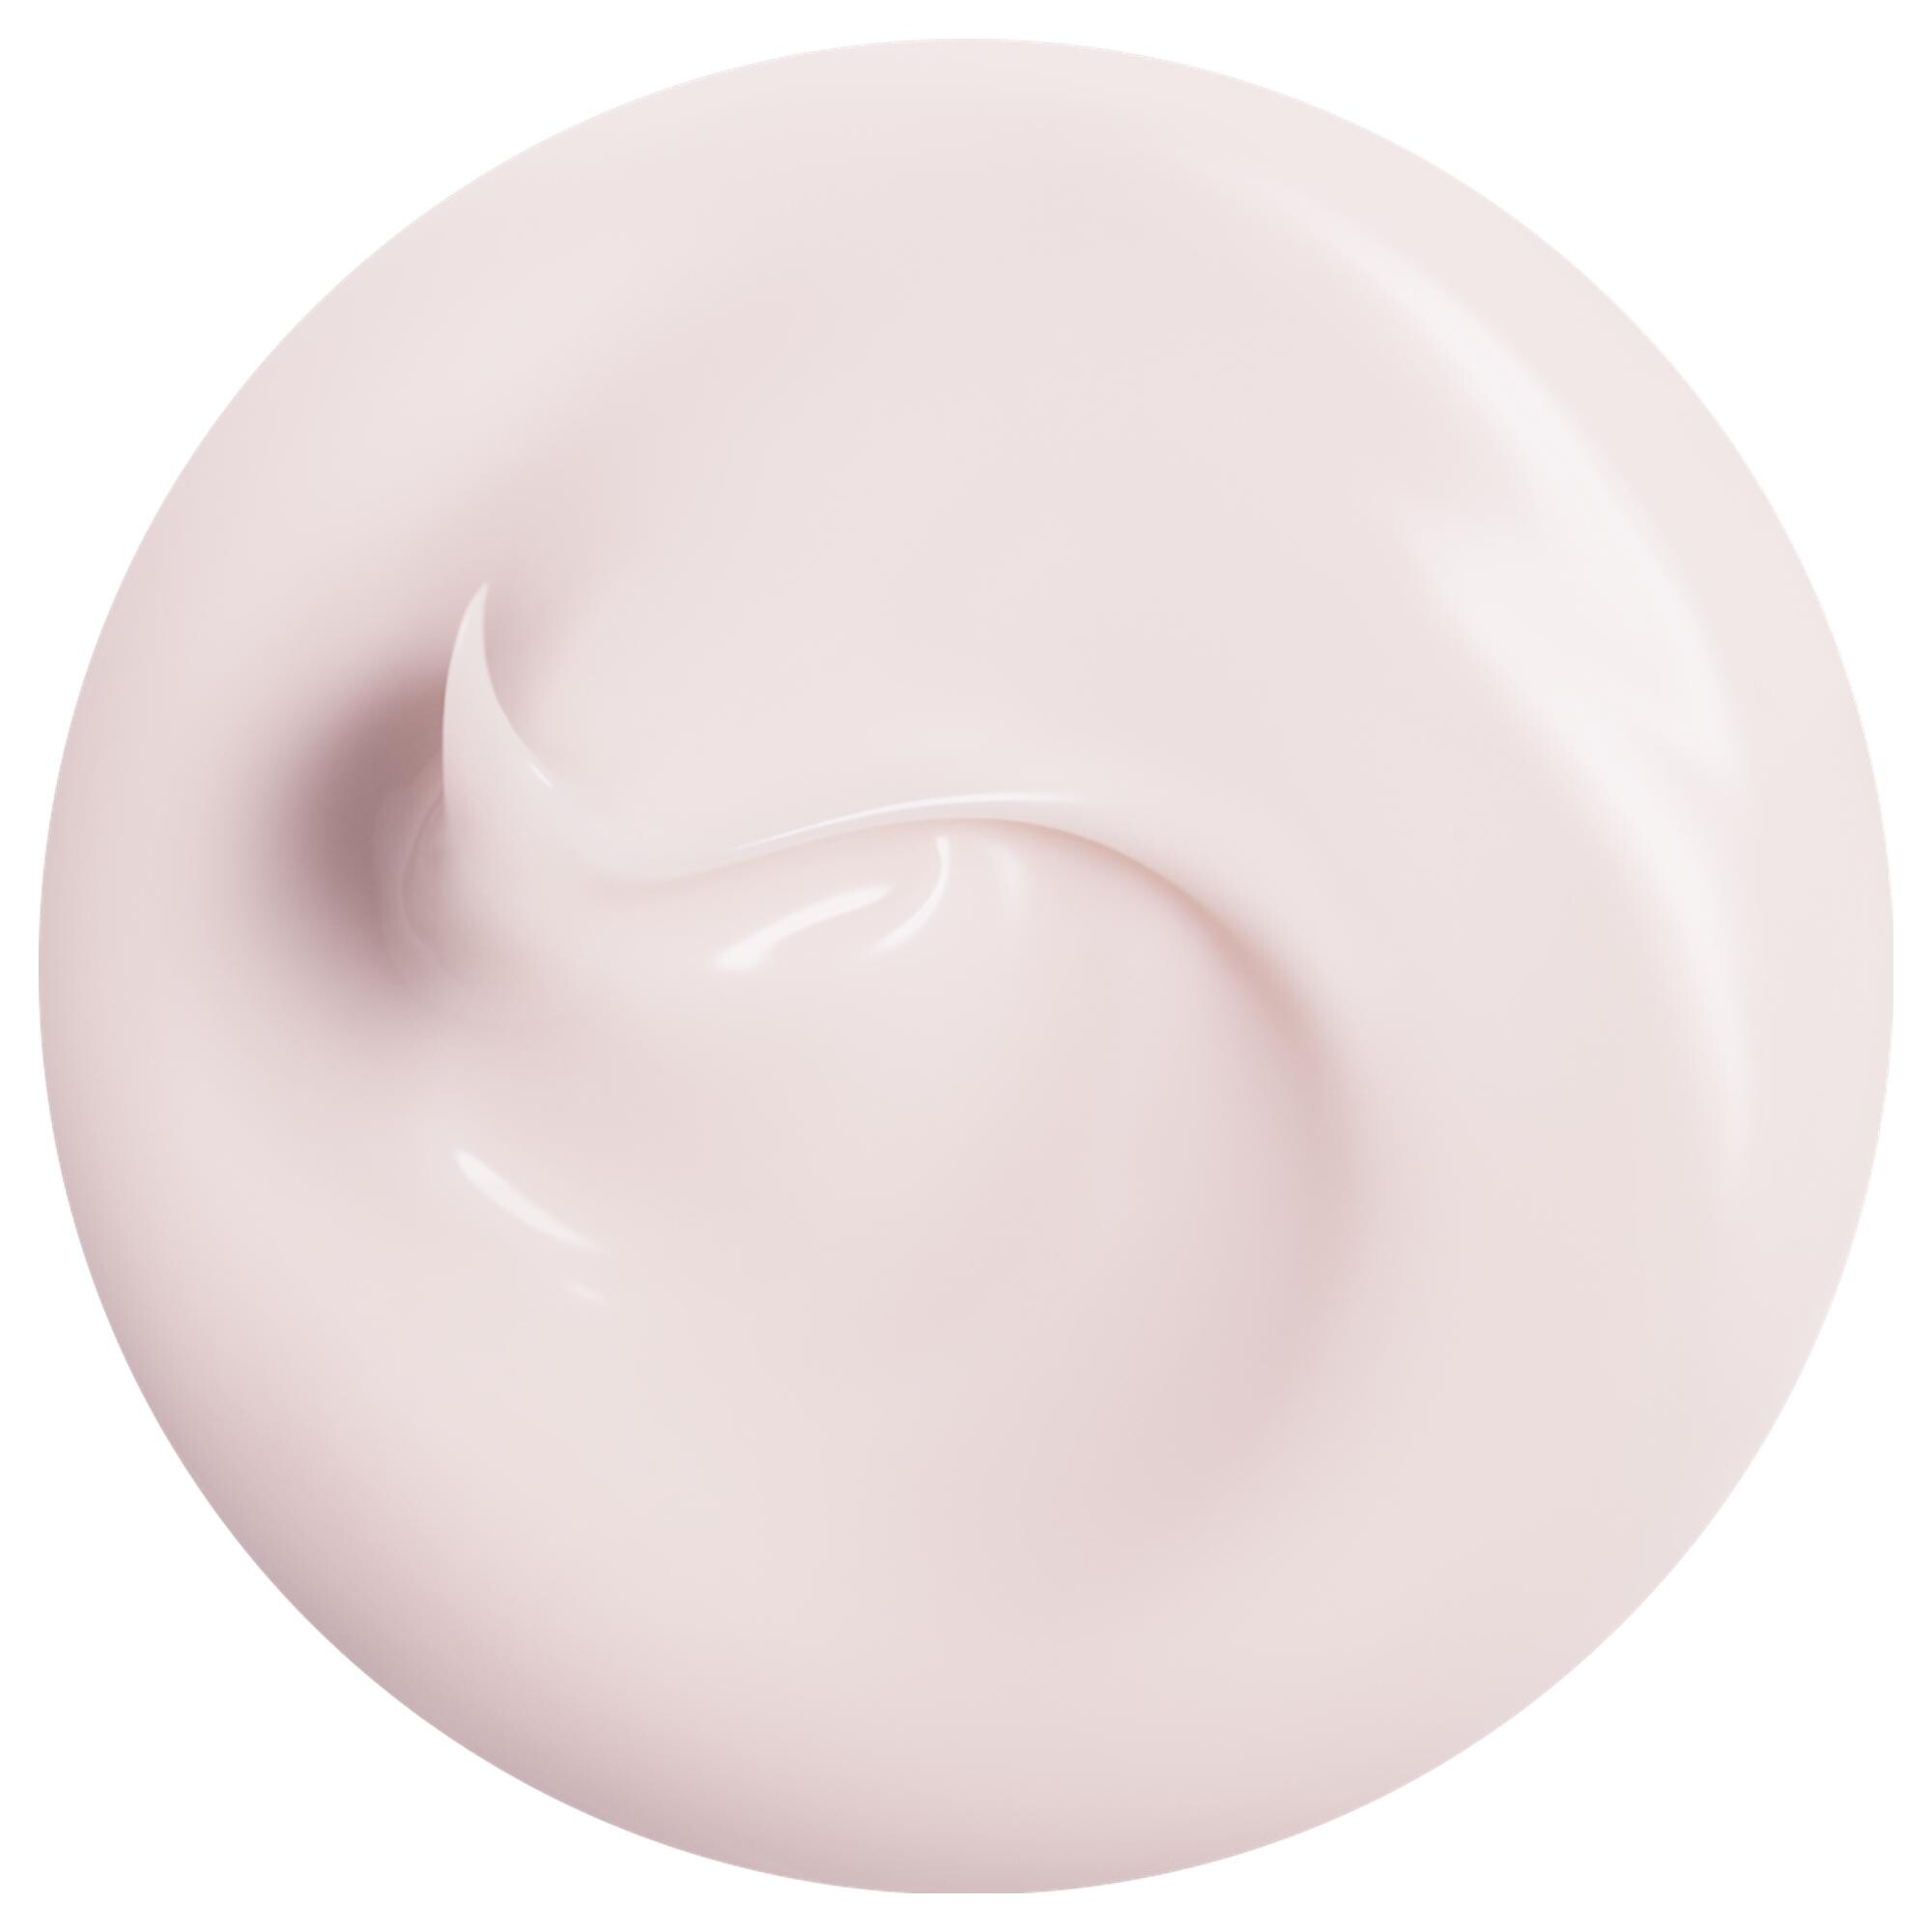 Gesichtspflege Shiseido Shiseido Vital Perfection Overnight Firming Treatment 50ml kaufen